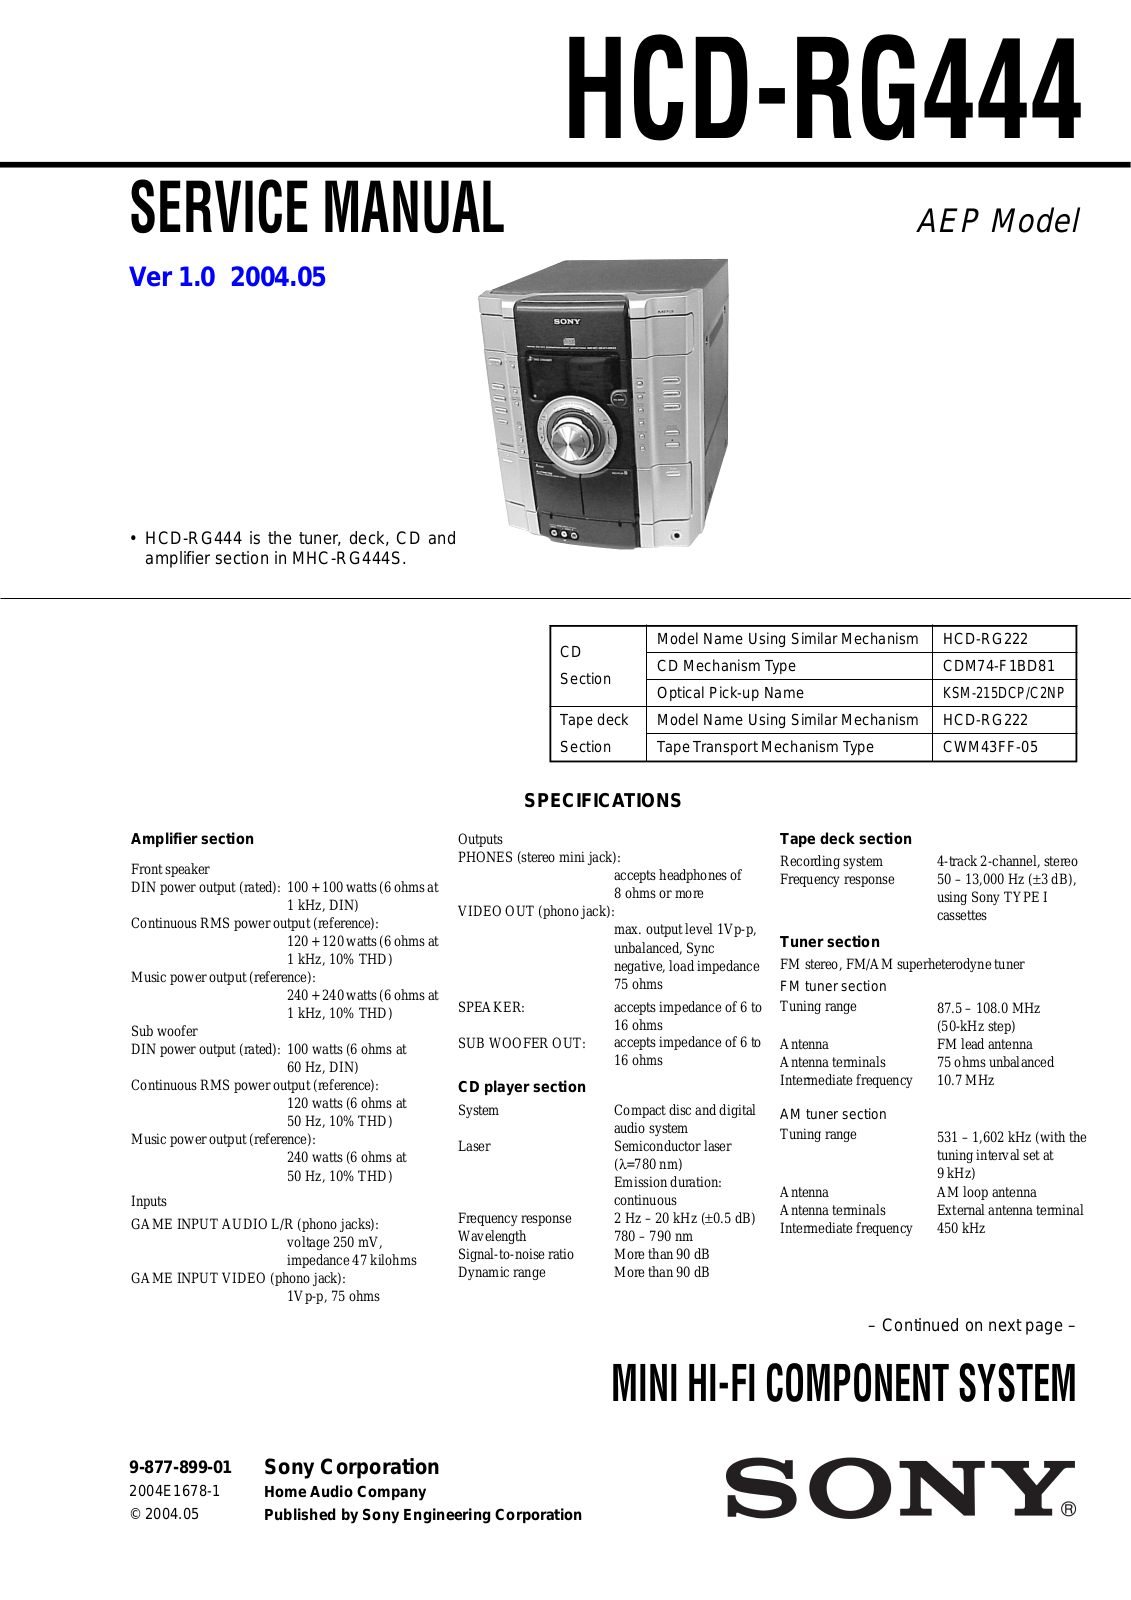 Sony HCD-RG444 Service Manual